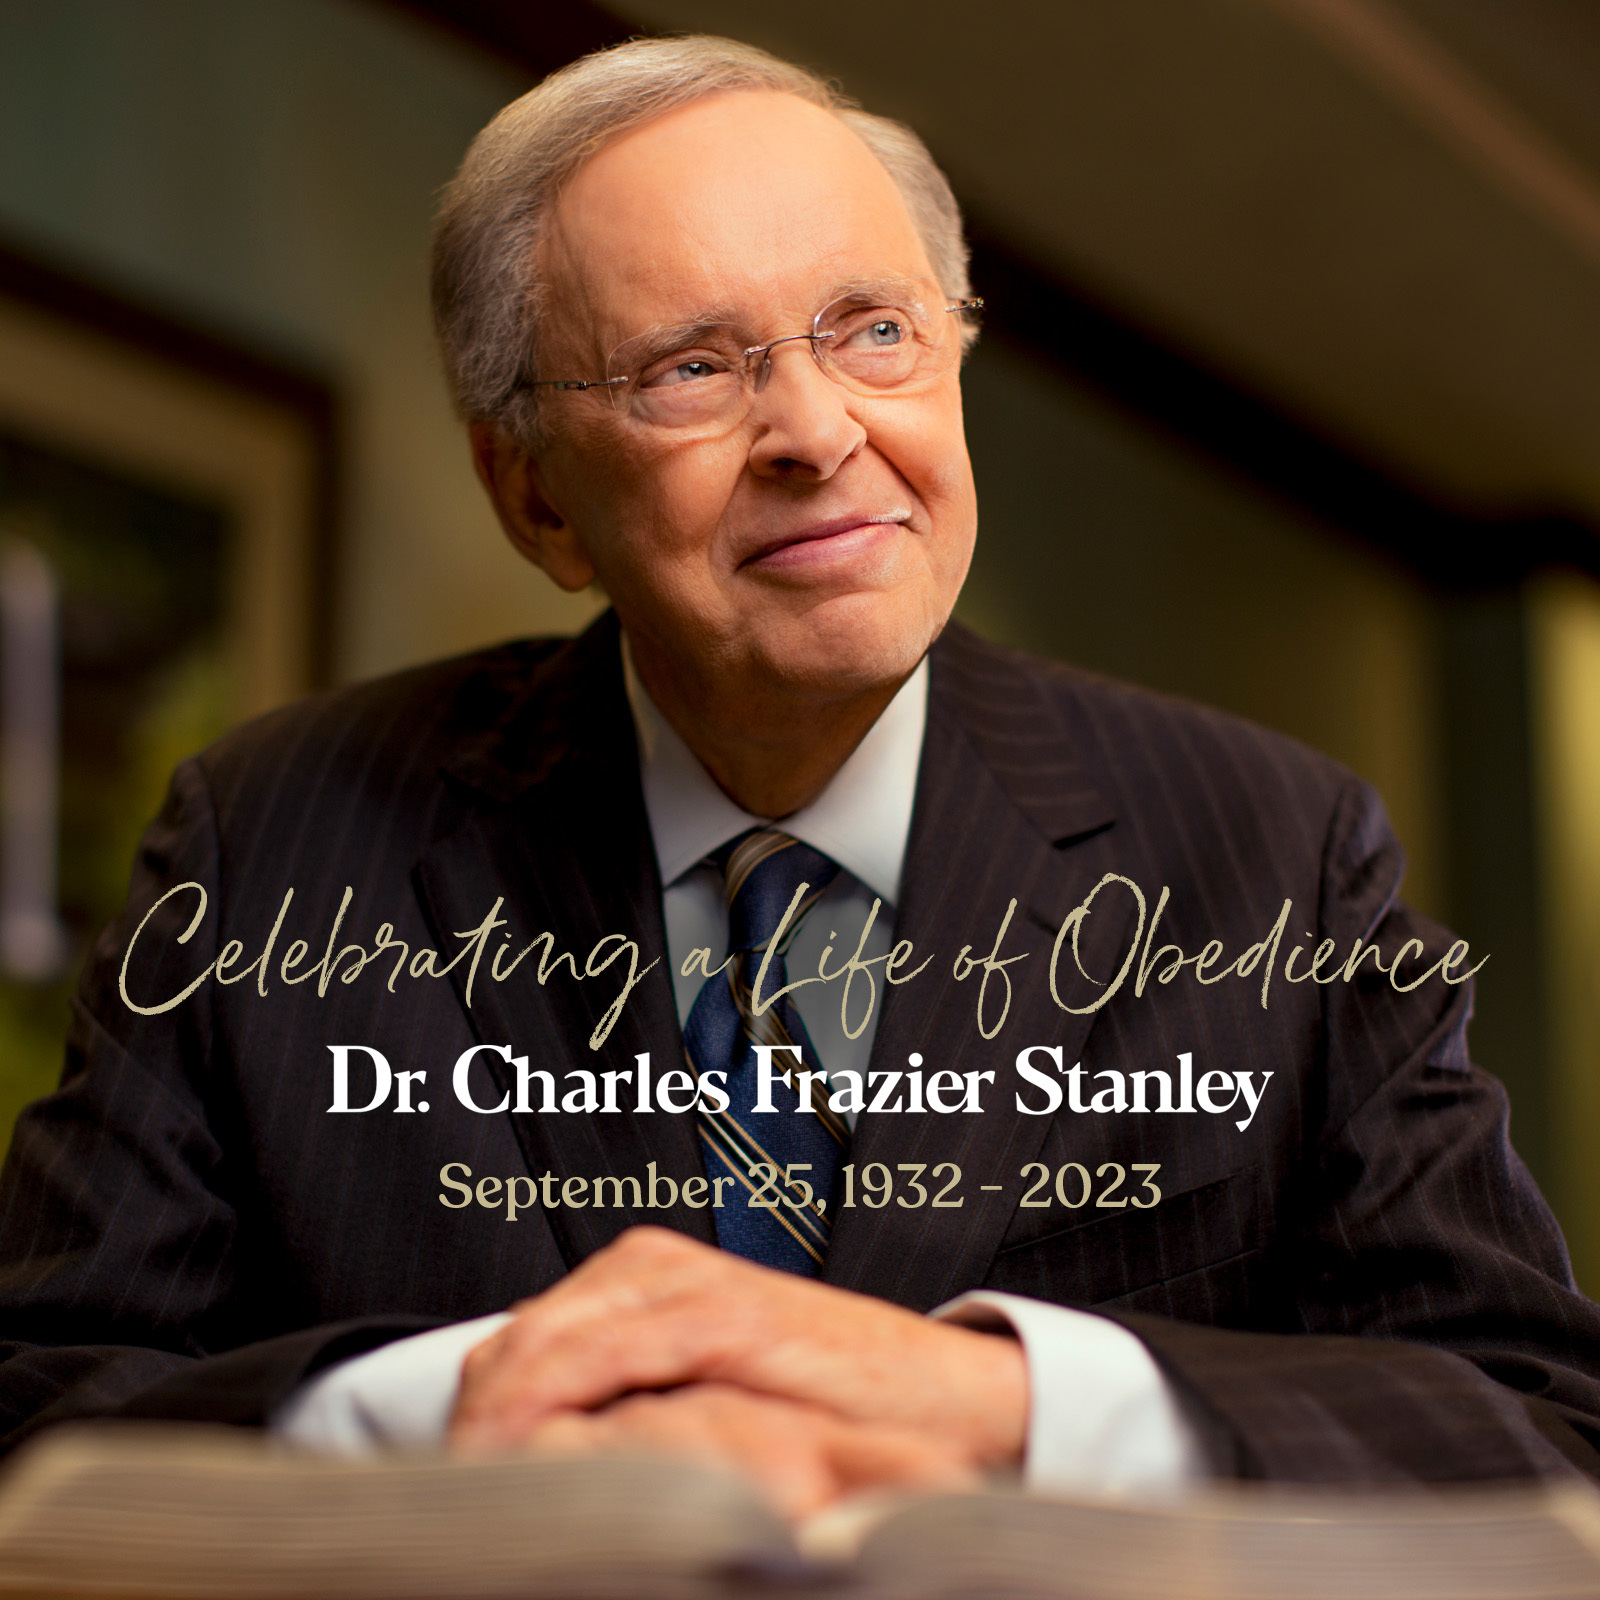 Dr. Charles Frazier Stanley Dies At 90